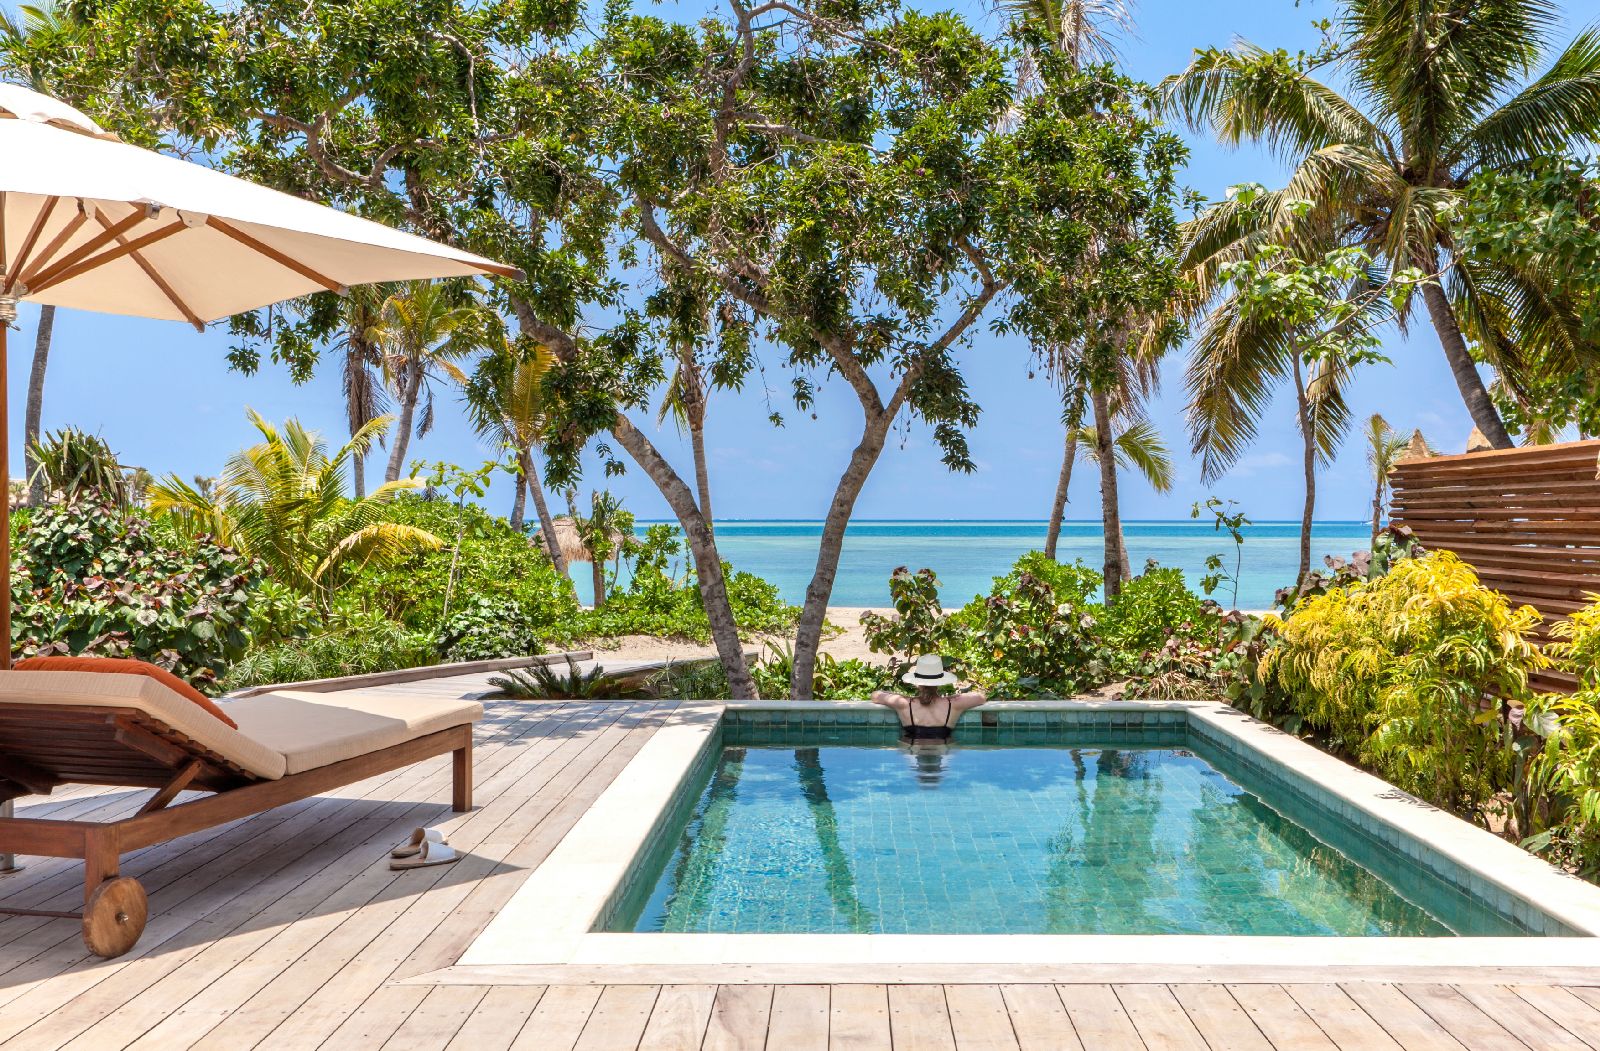 Plunge pool of a Beachfront Villa at the Six Senses Fiji